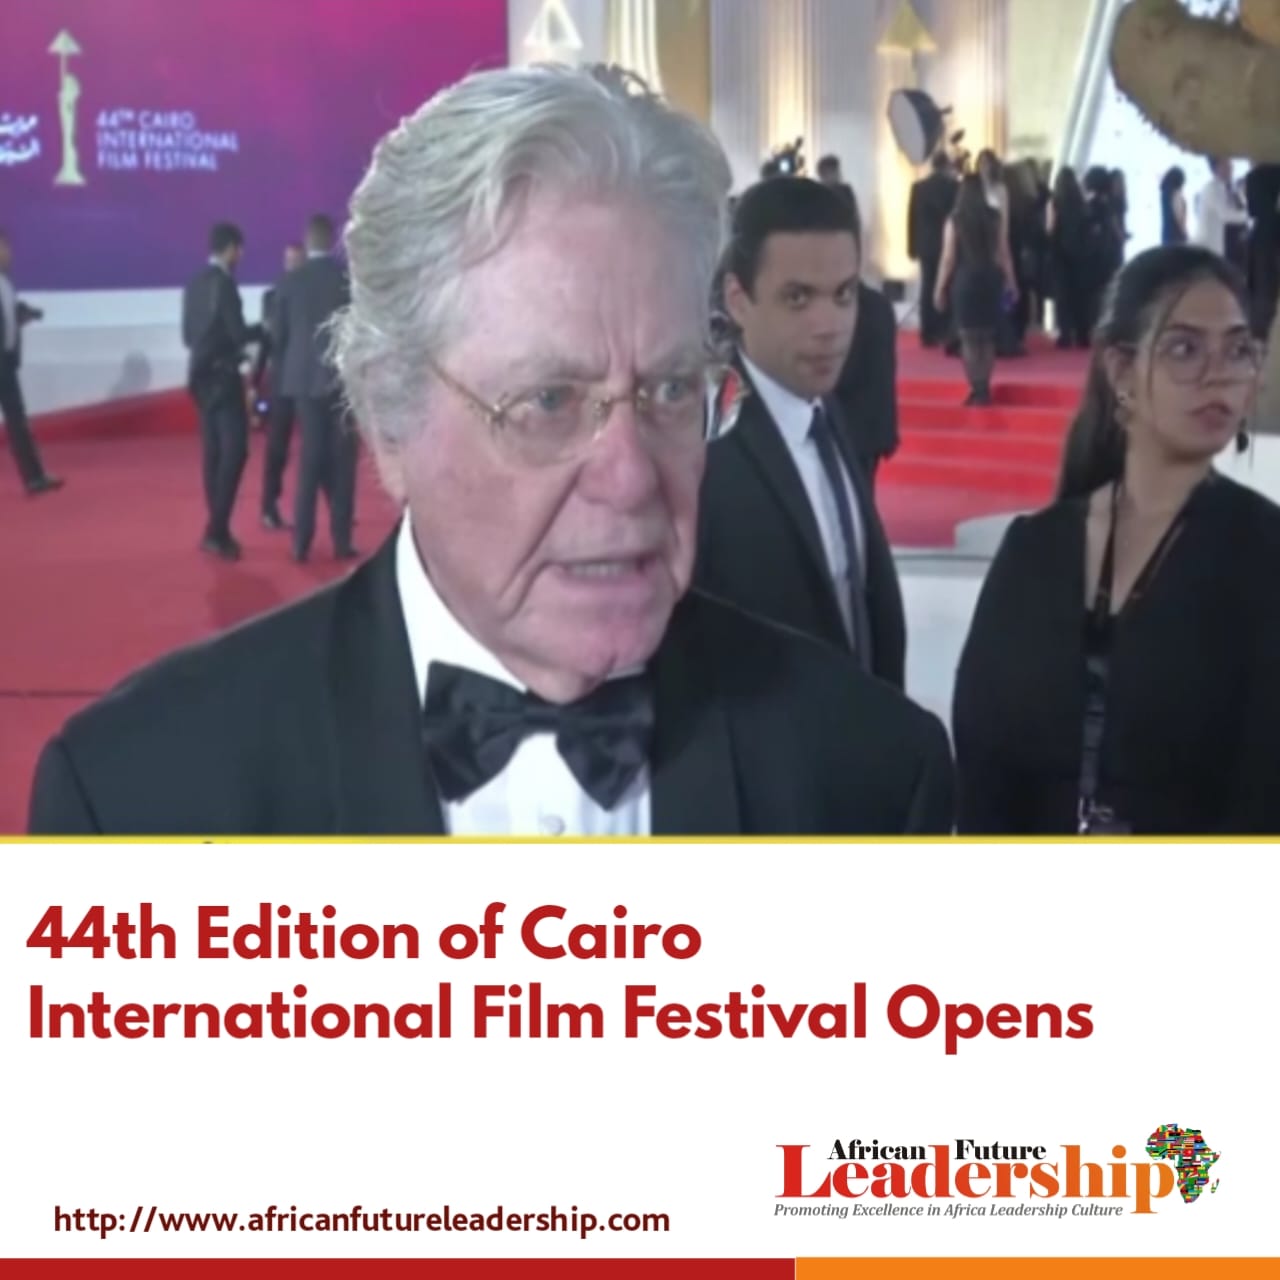 44th Edition of Cairo International Film Festival Opens